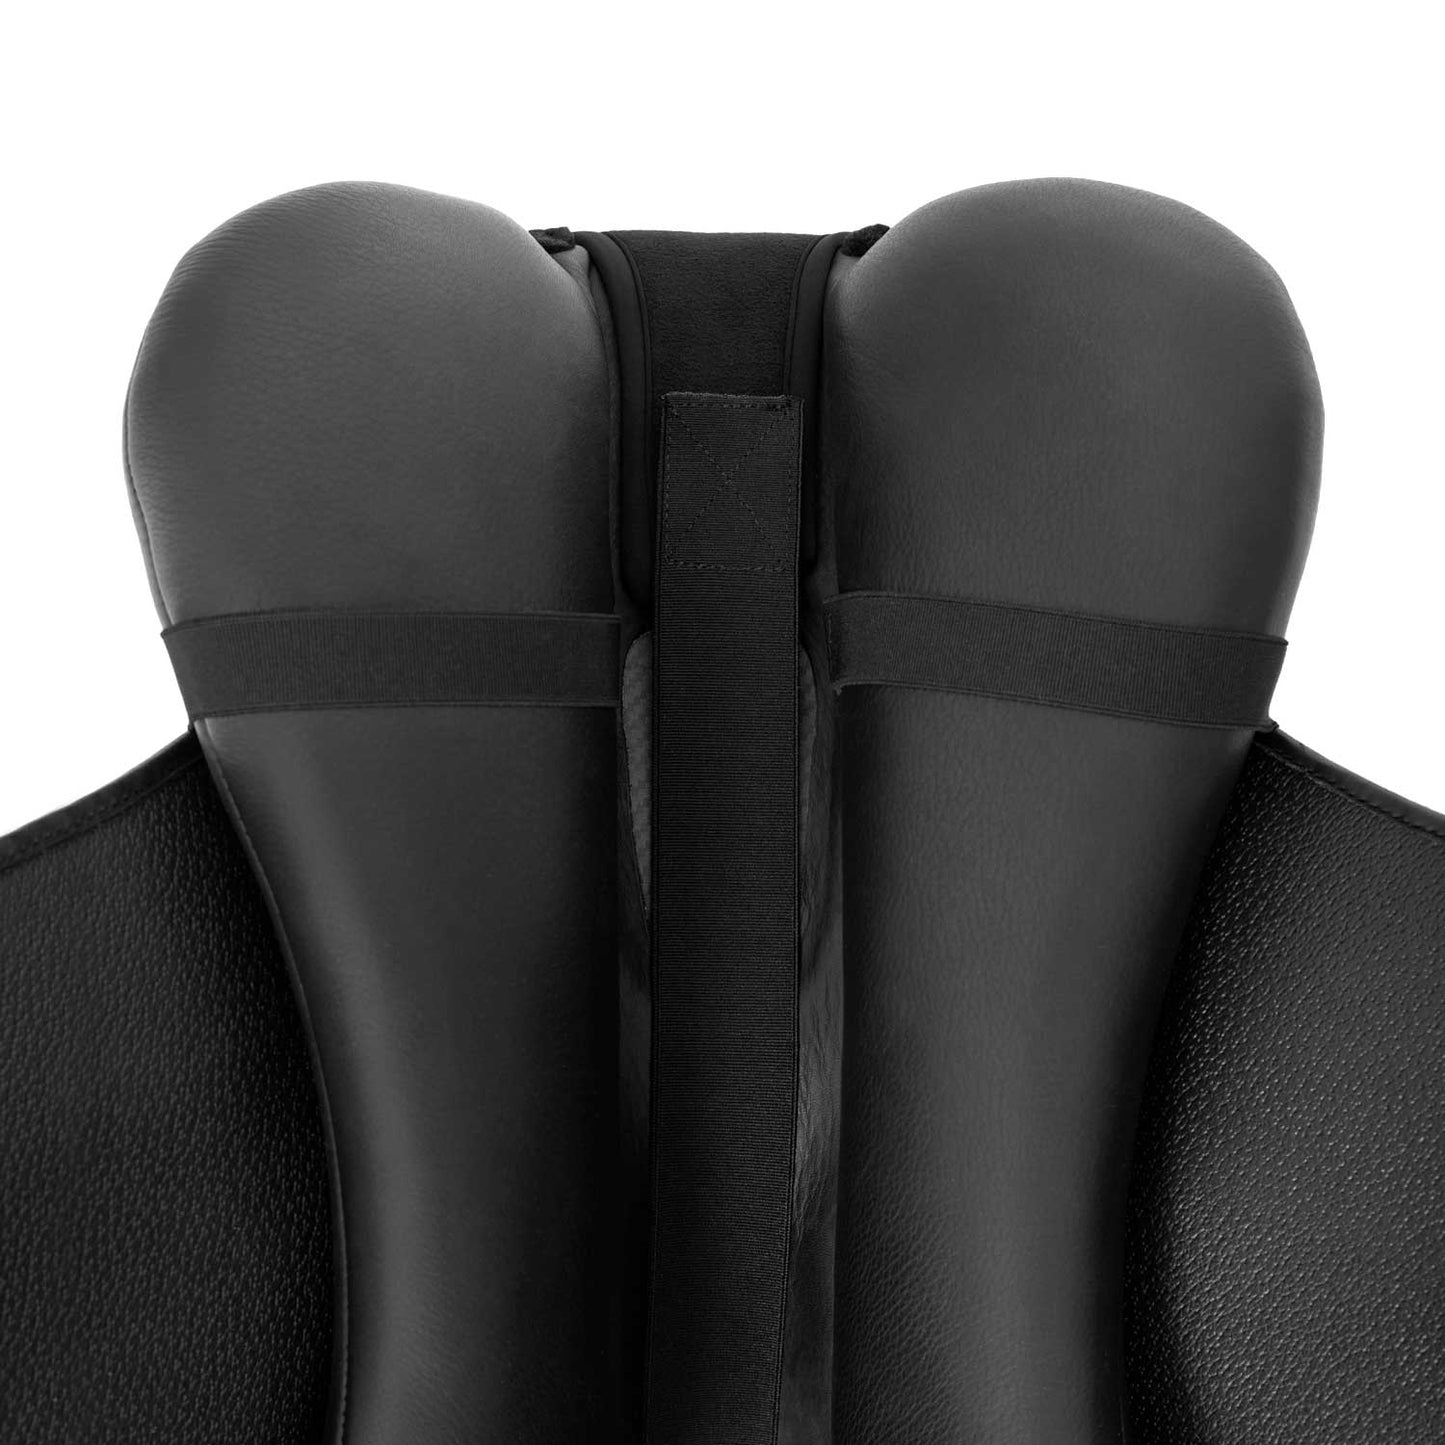 Copriseggio Dressage Hexagonal Ortho-pubis 20mm | El gaucho sport